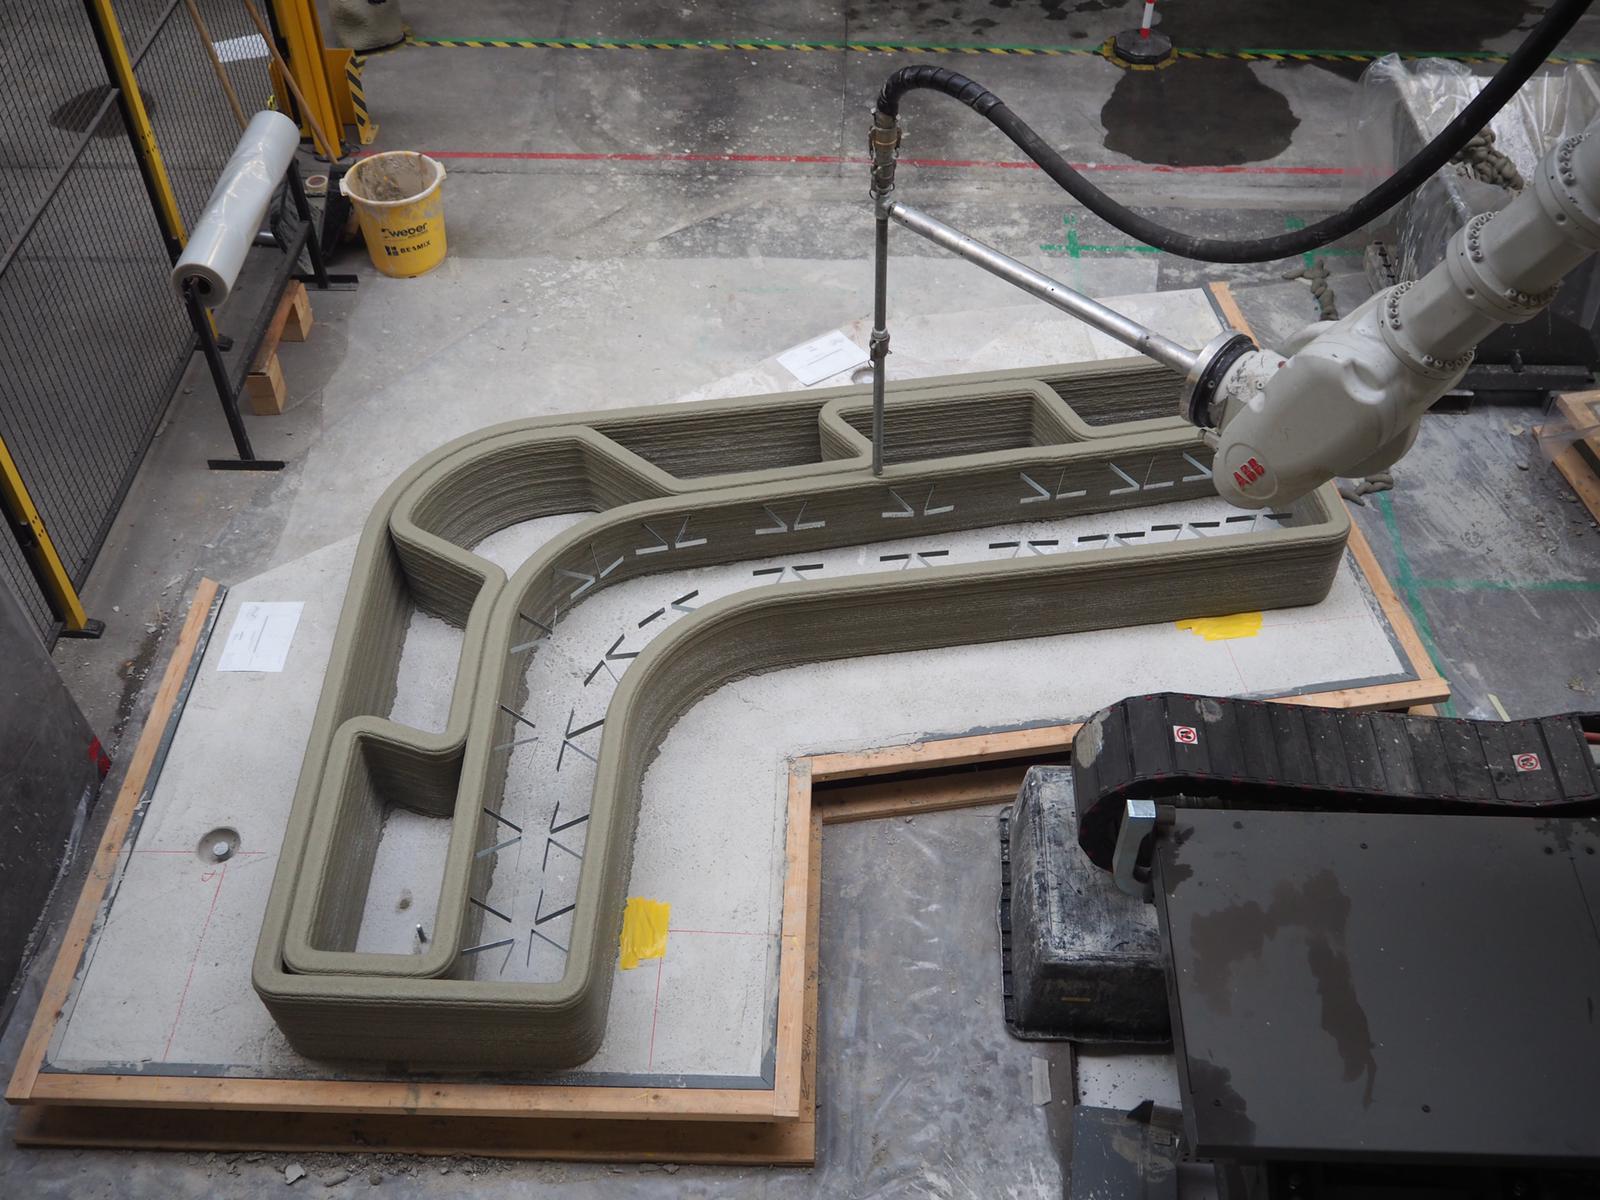 Flexible, durable, strong: 3D printing with concrete provides numerous advantages